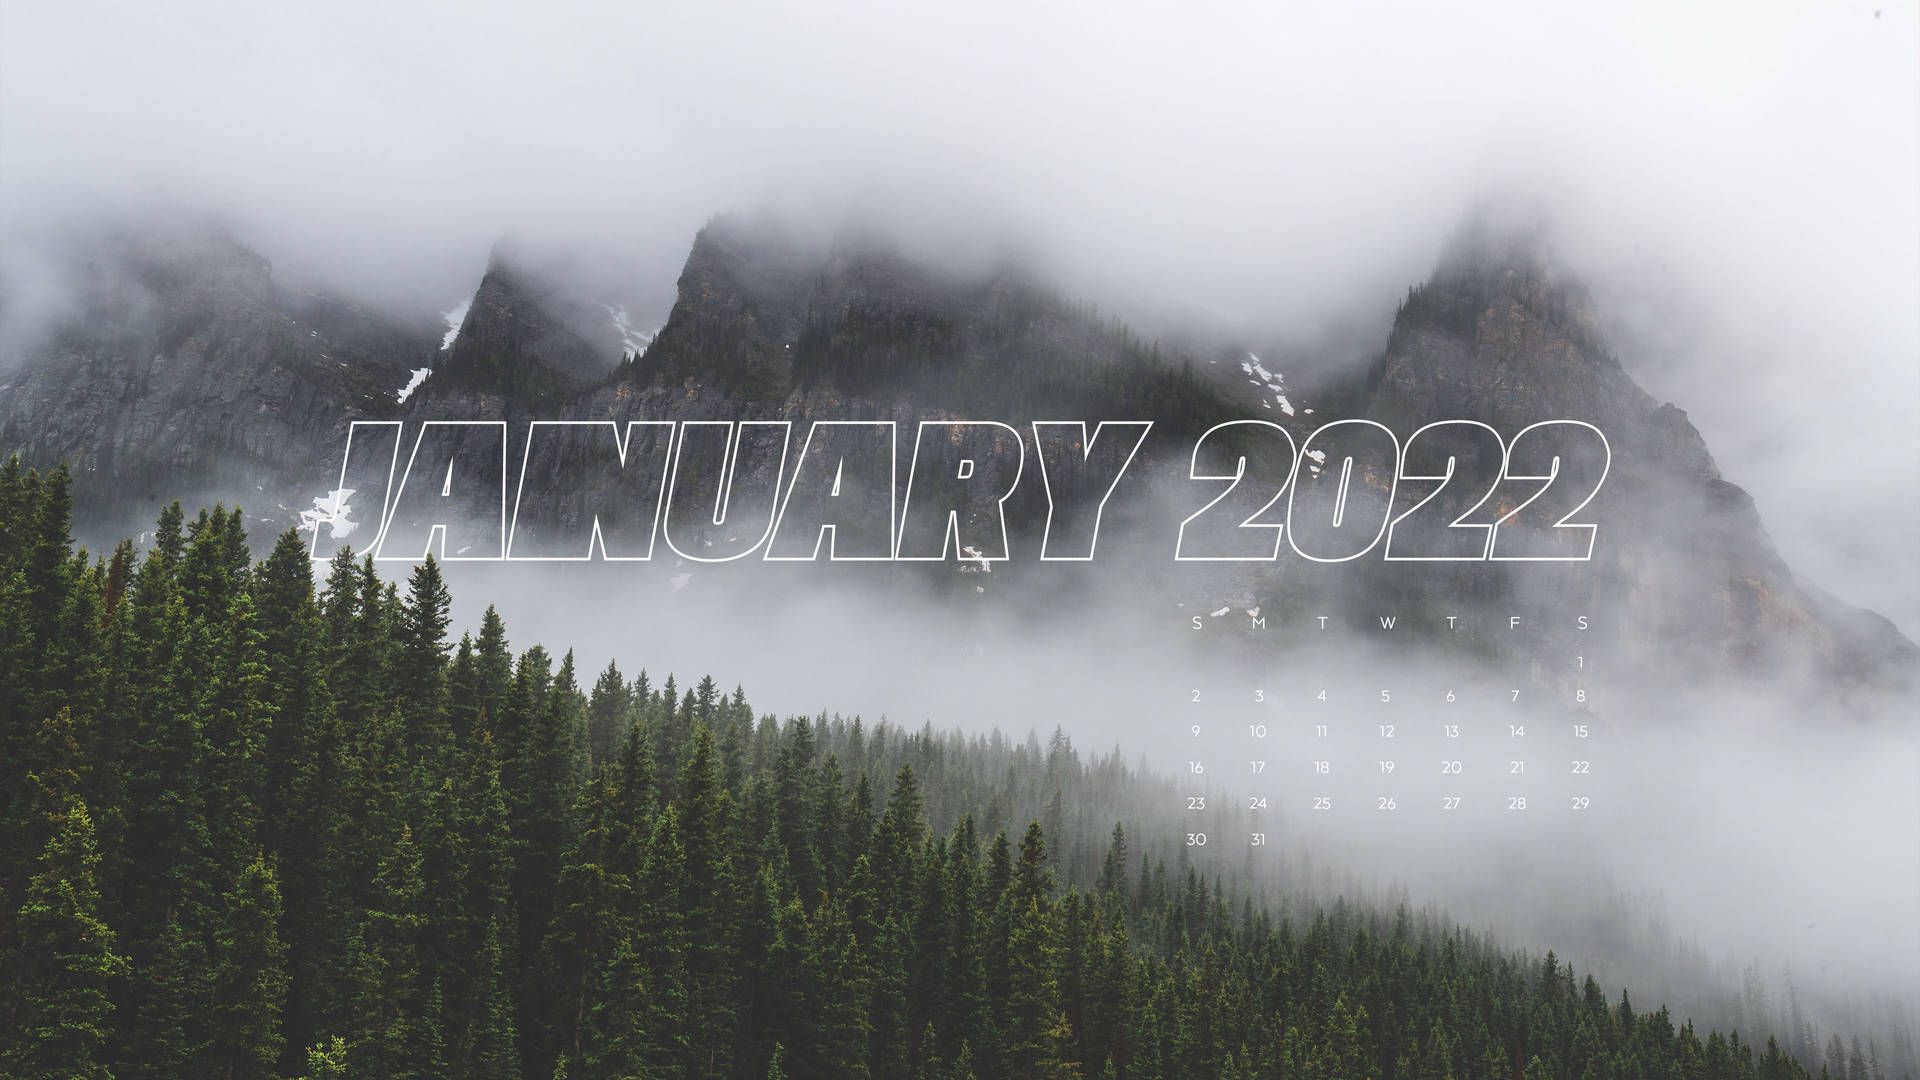 January 2022 Foggy Mountains Wallpaper